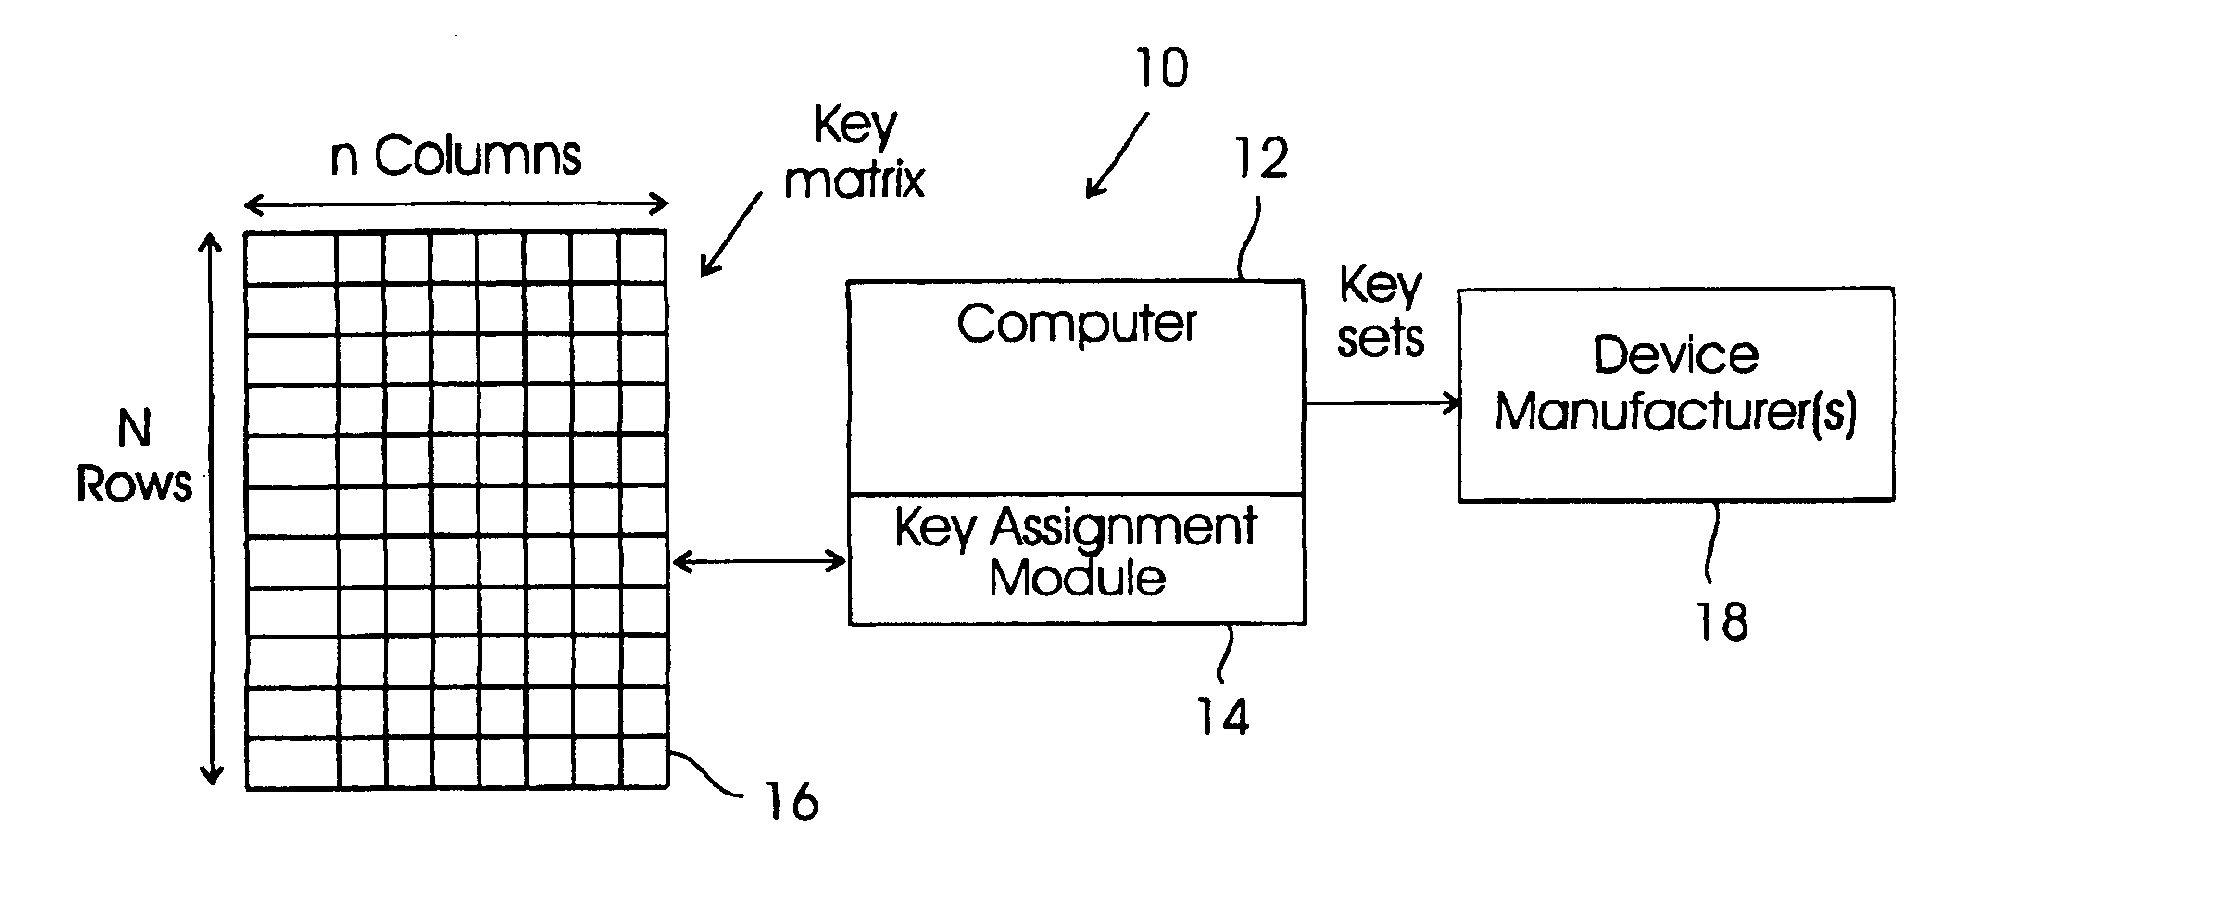 Method for assigning encryption keys